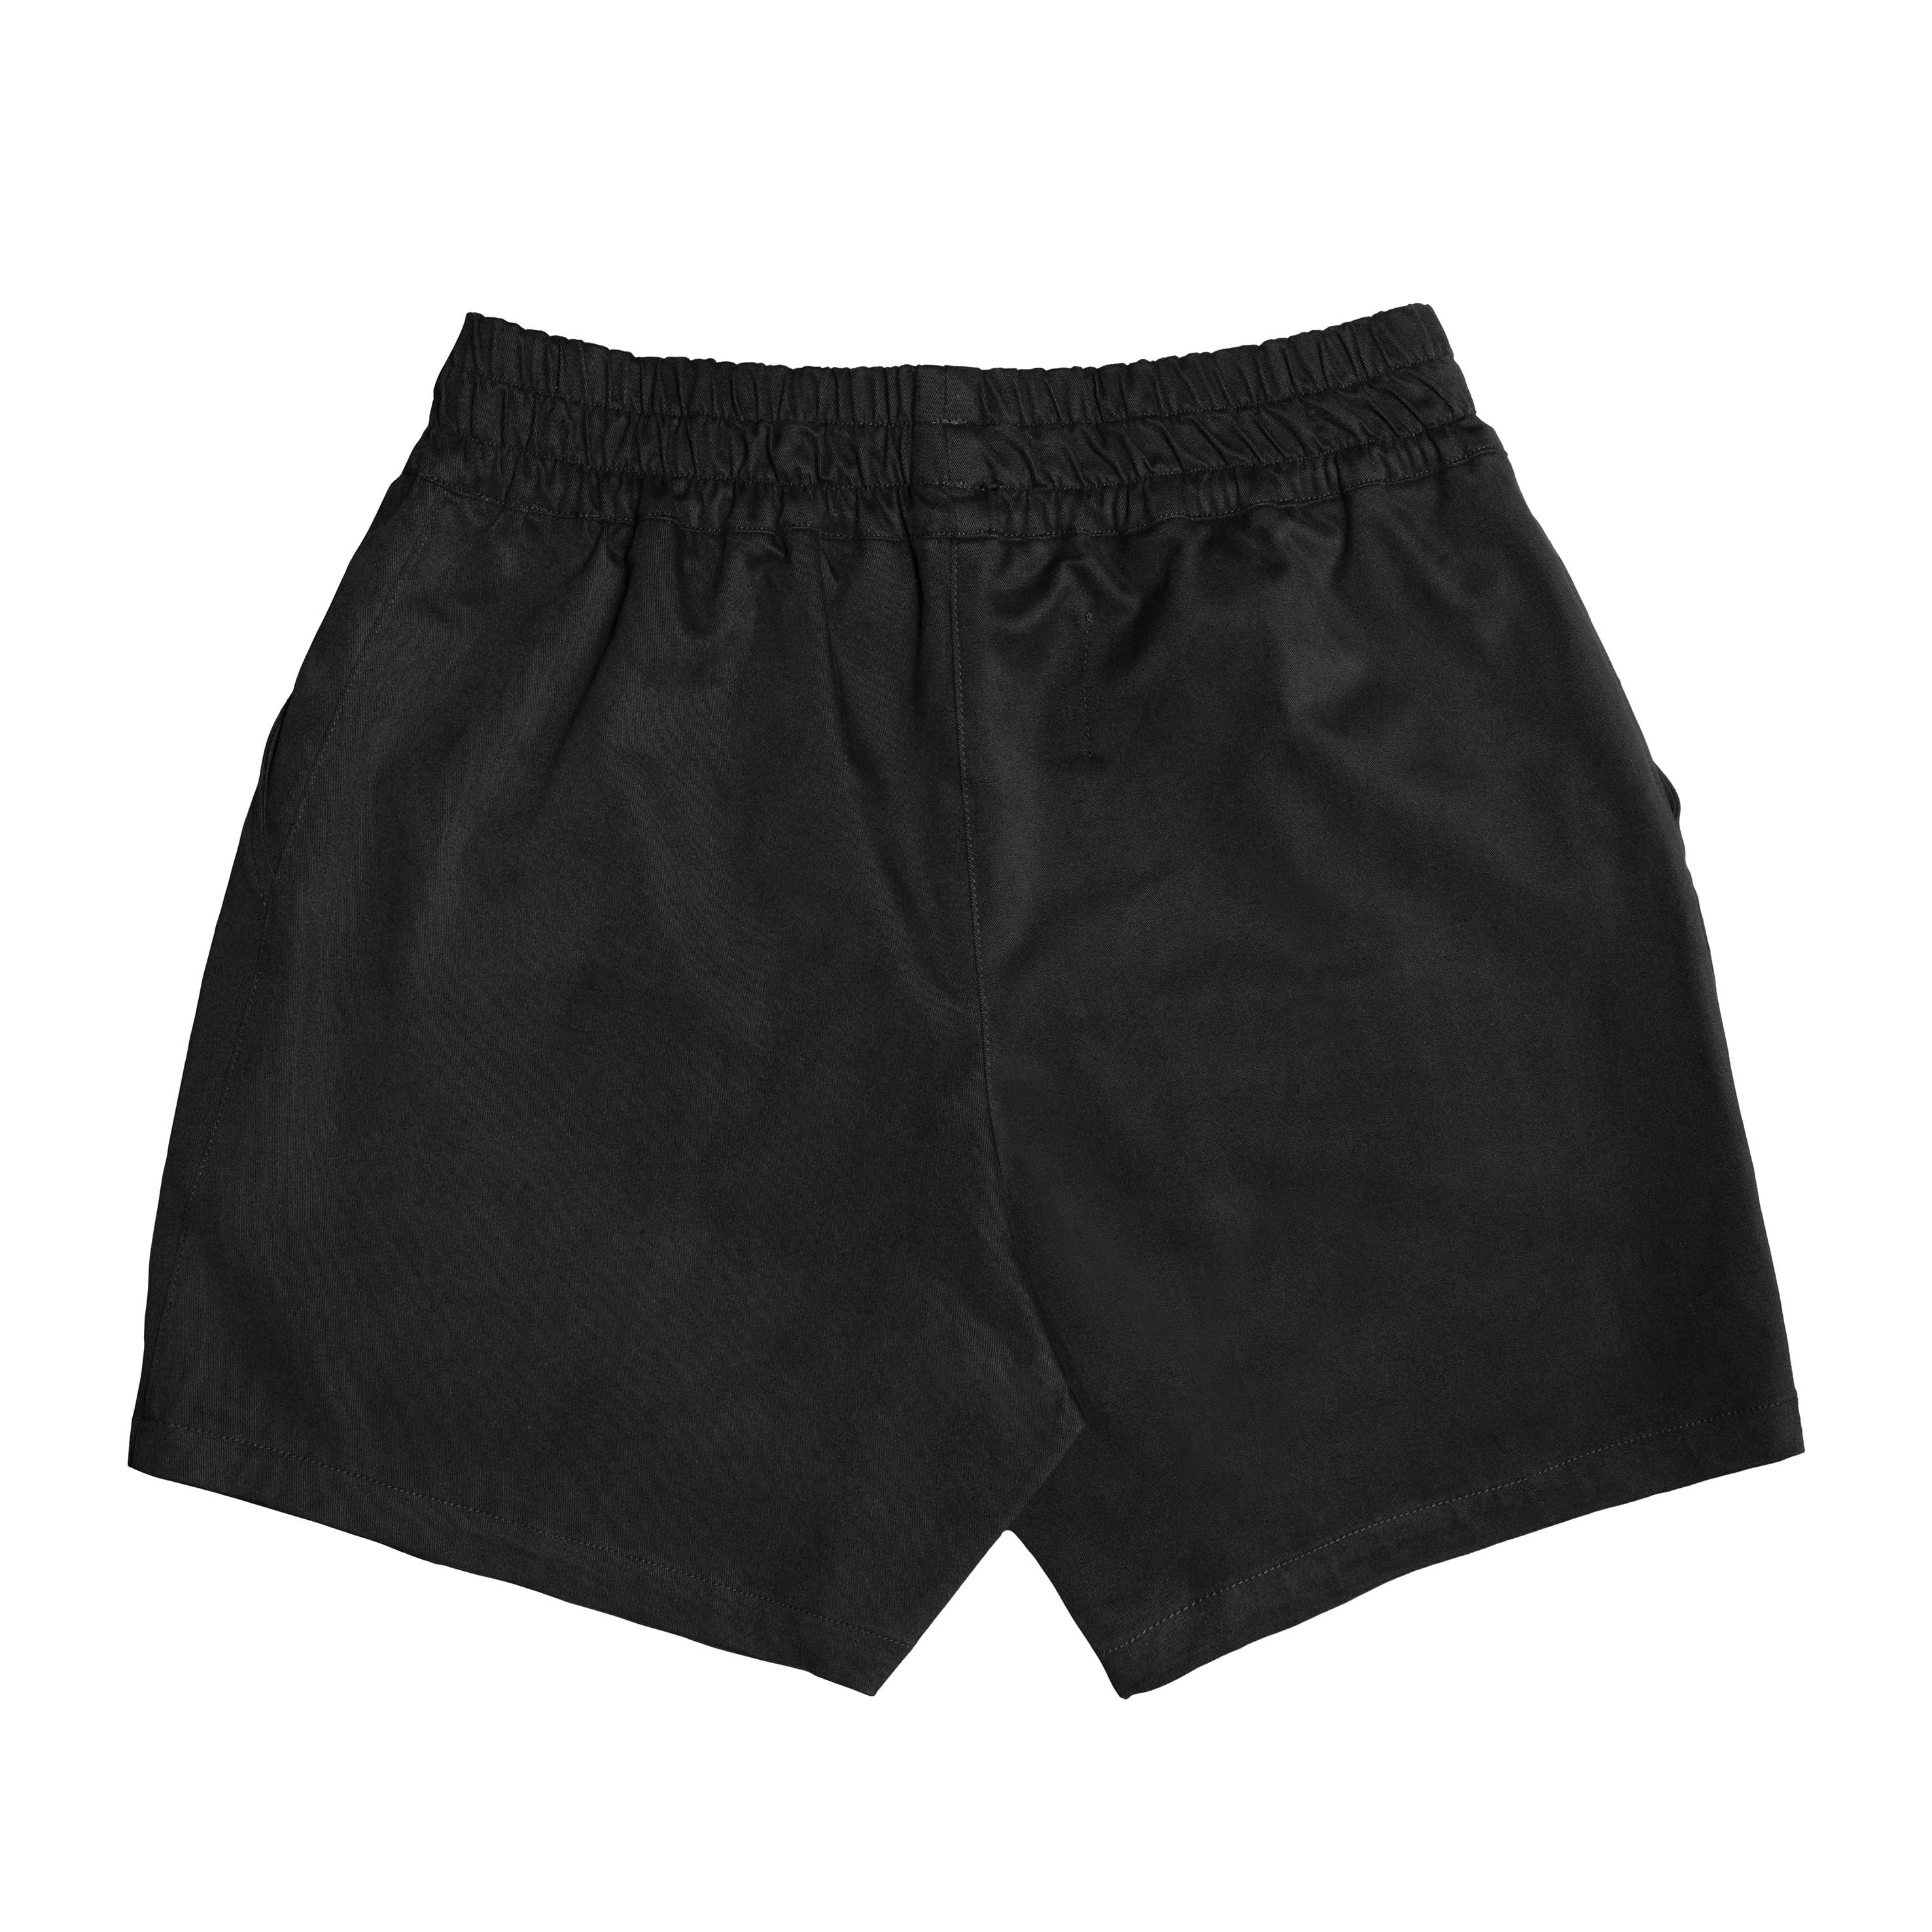 All Day Short Shorts - Black